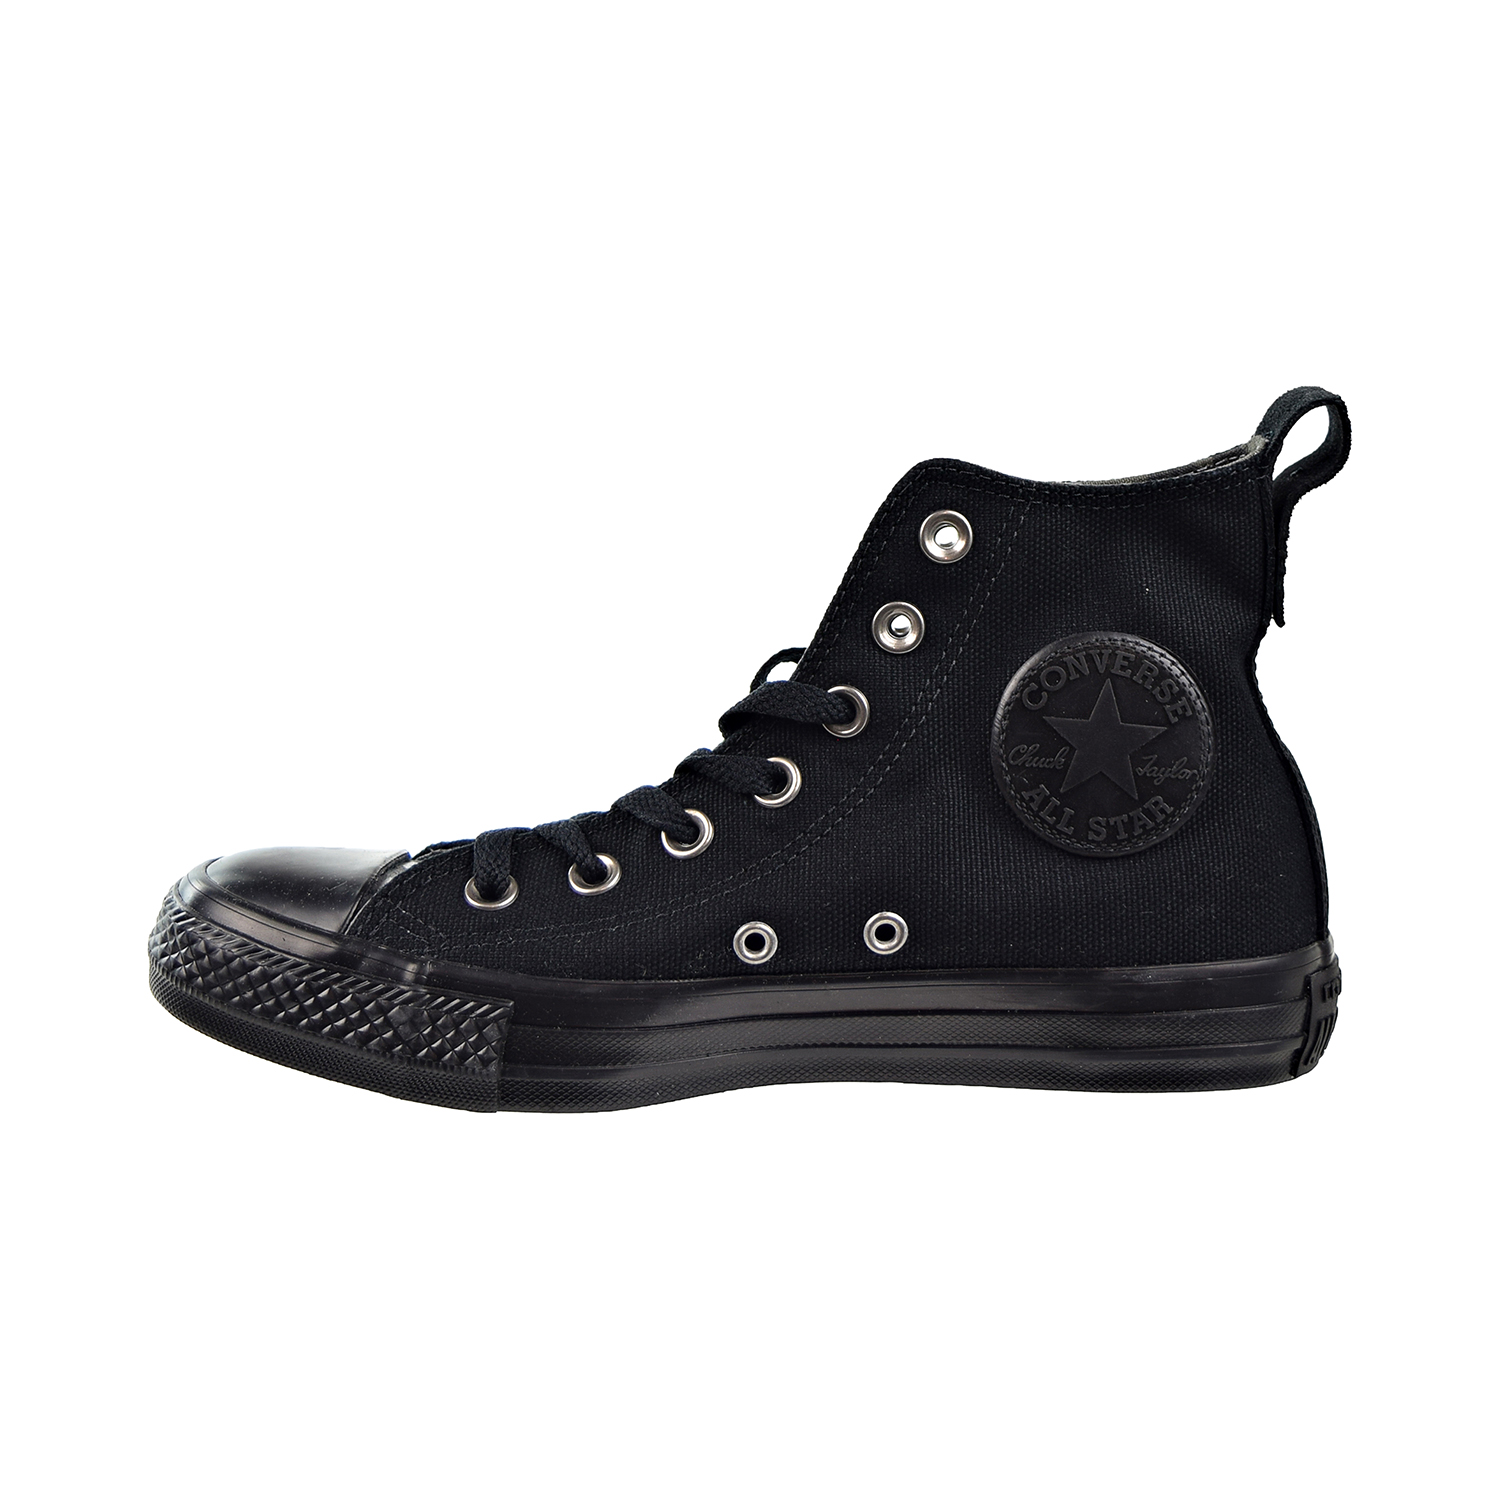 Converse Chuck Taylor All Star Hi Mens Shoes Black/Mason Black 159753c - image 4 of 6